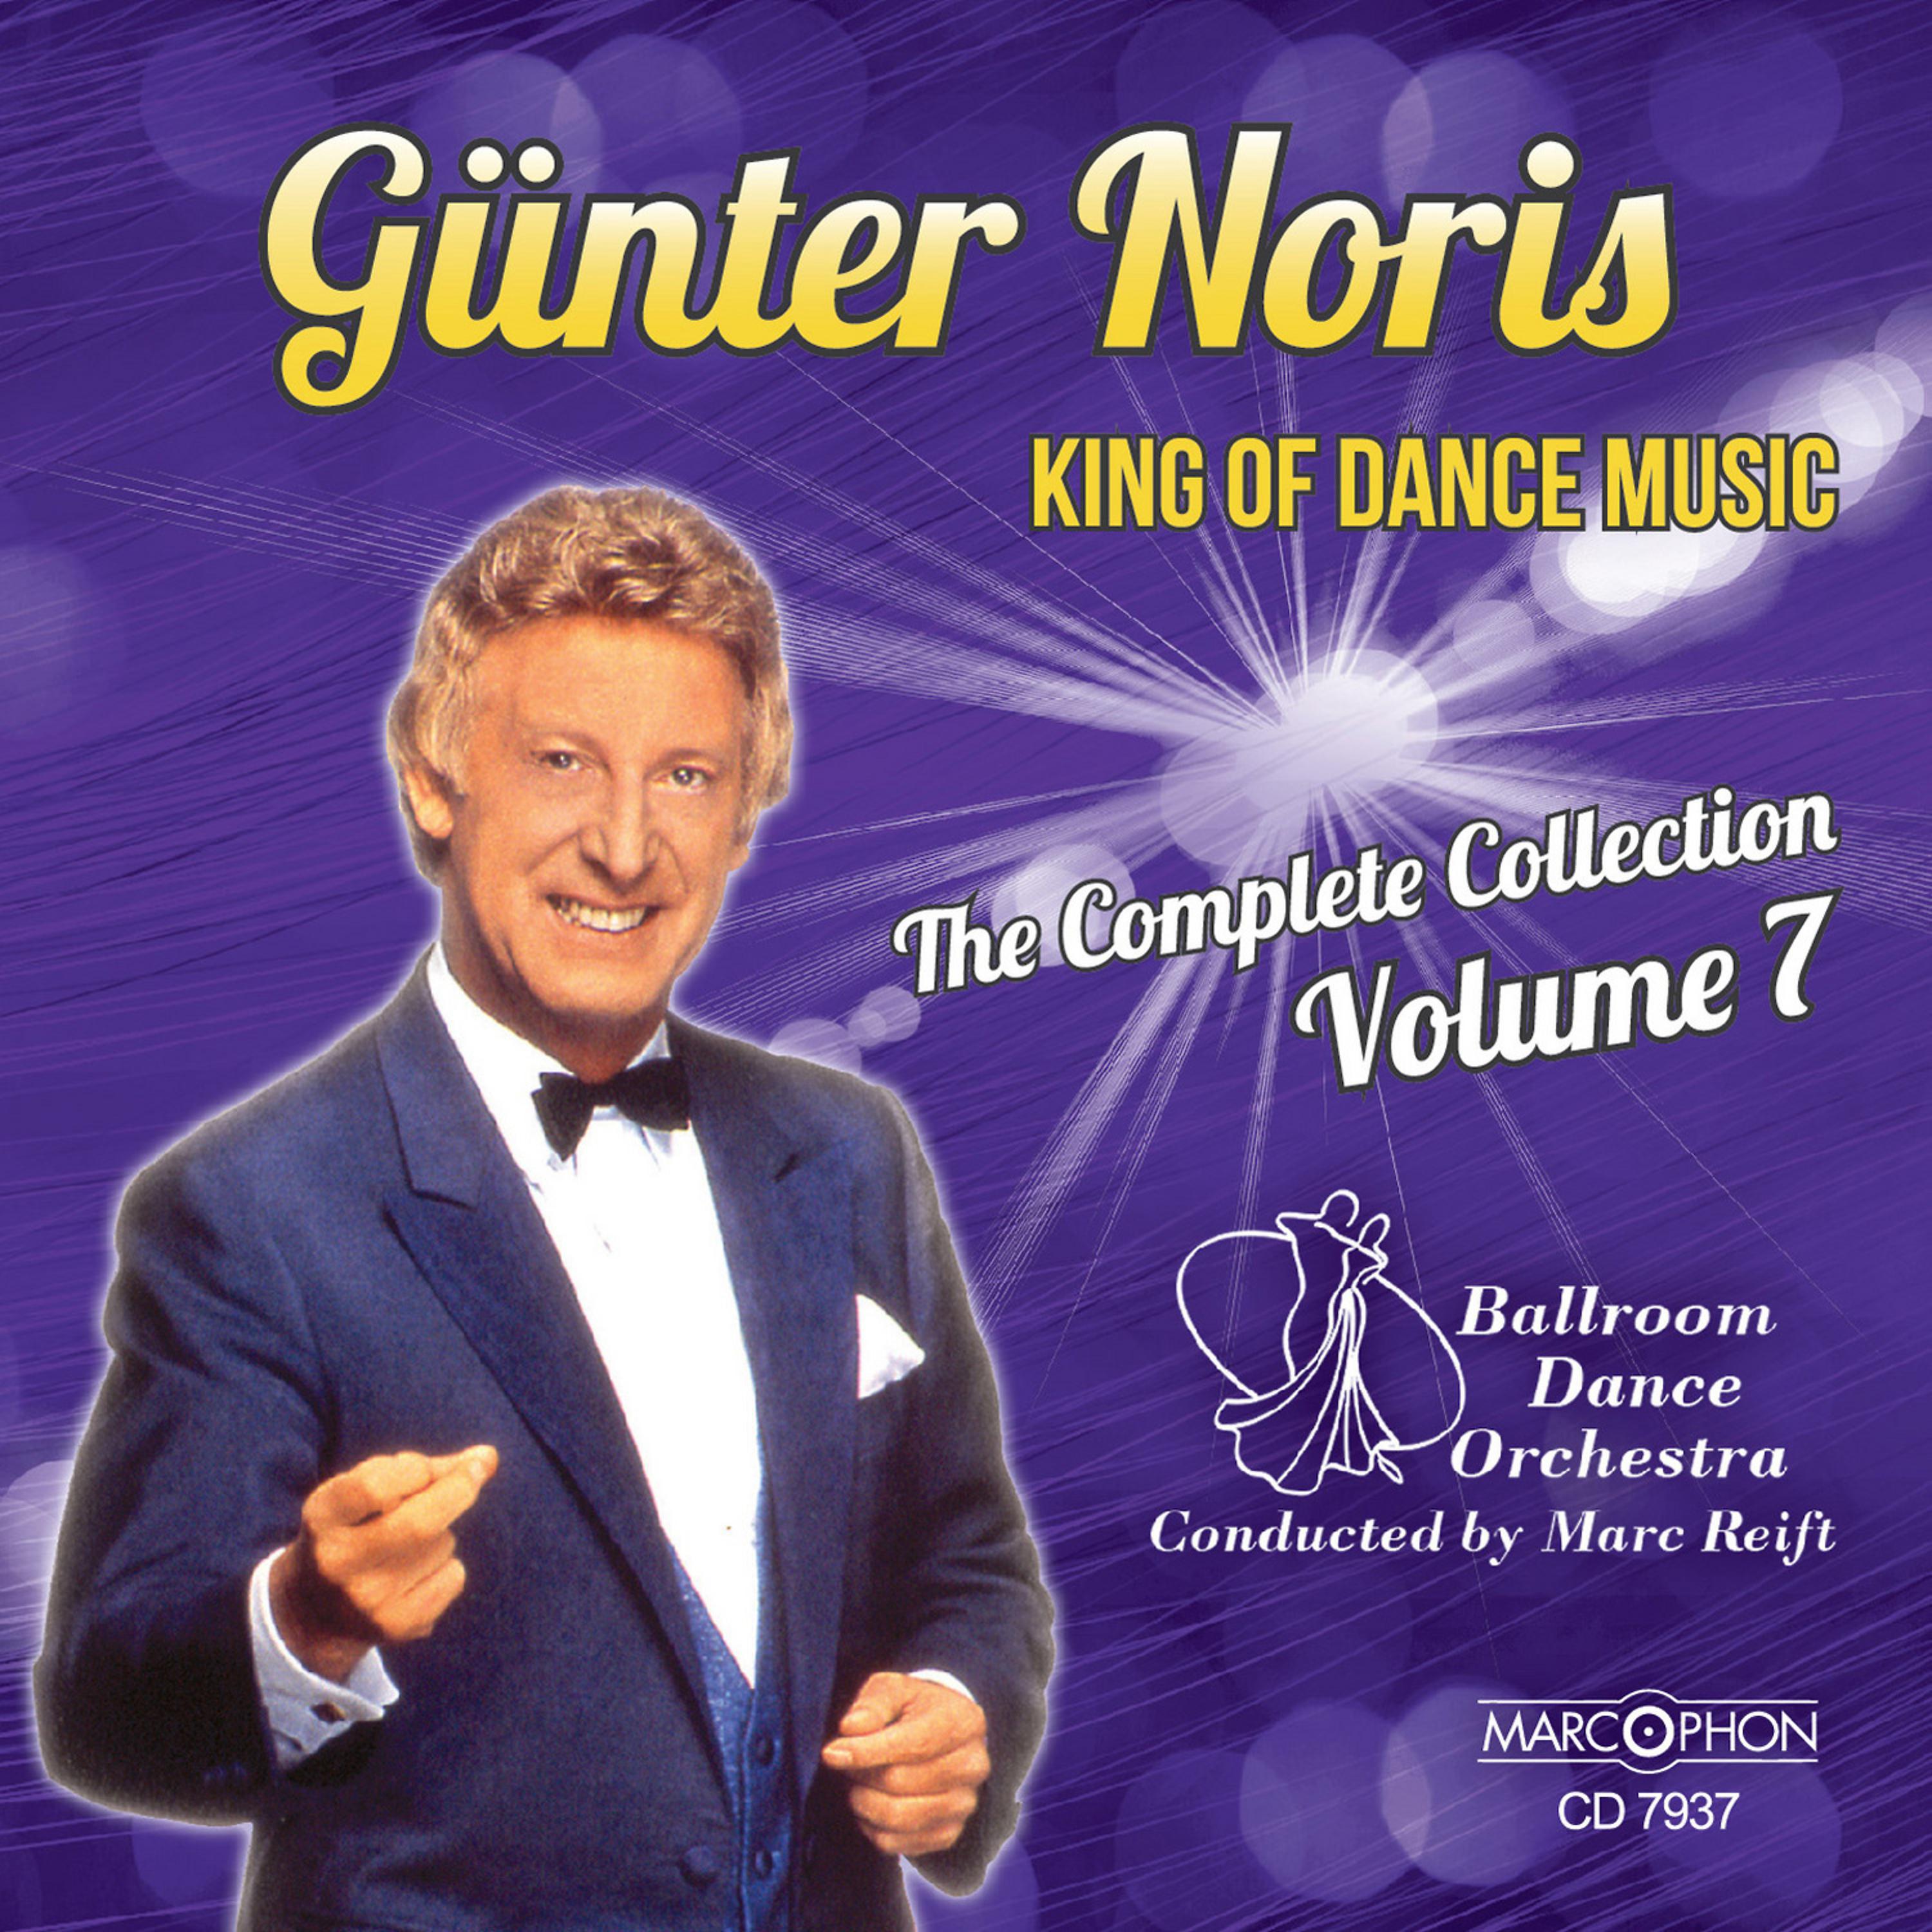 Постер альбома Günter Noris "King of Dance Music" The Complete Collection Volume 7